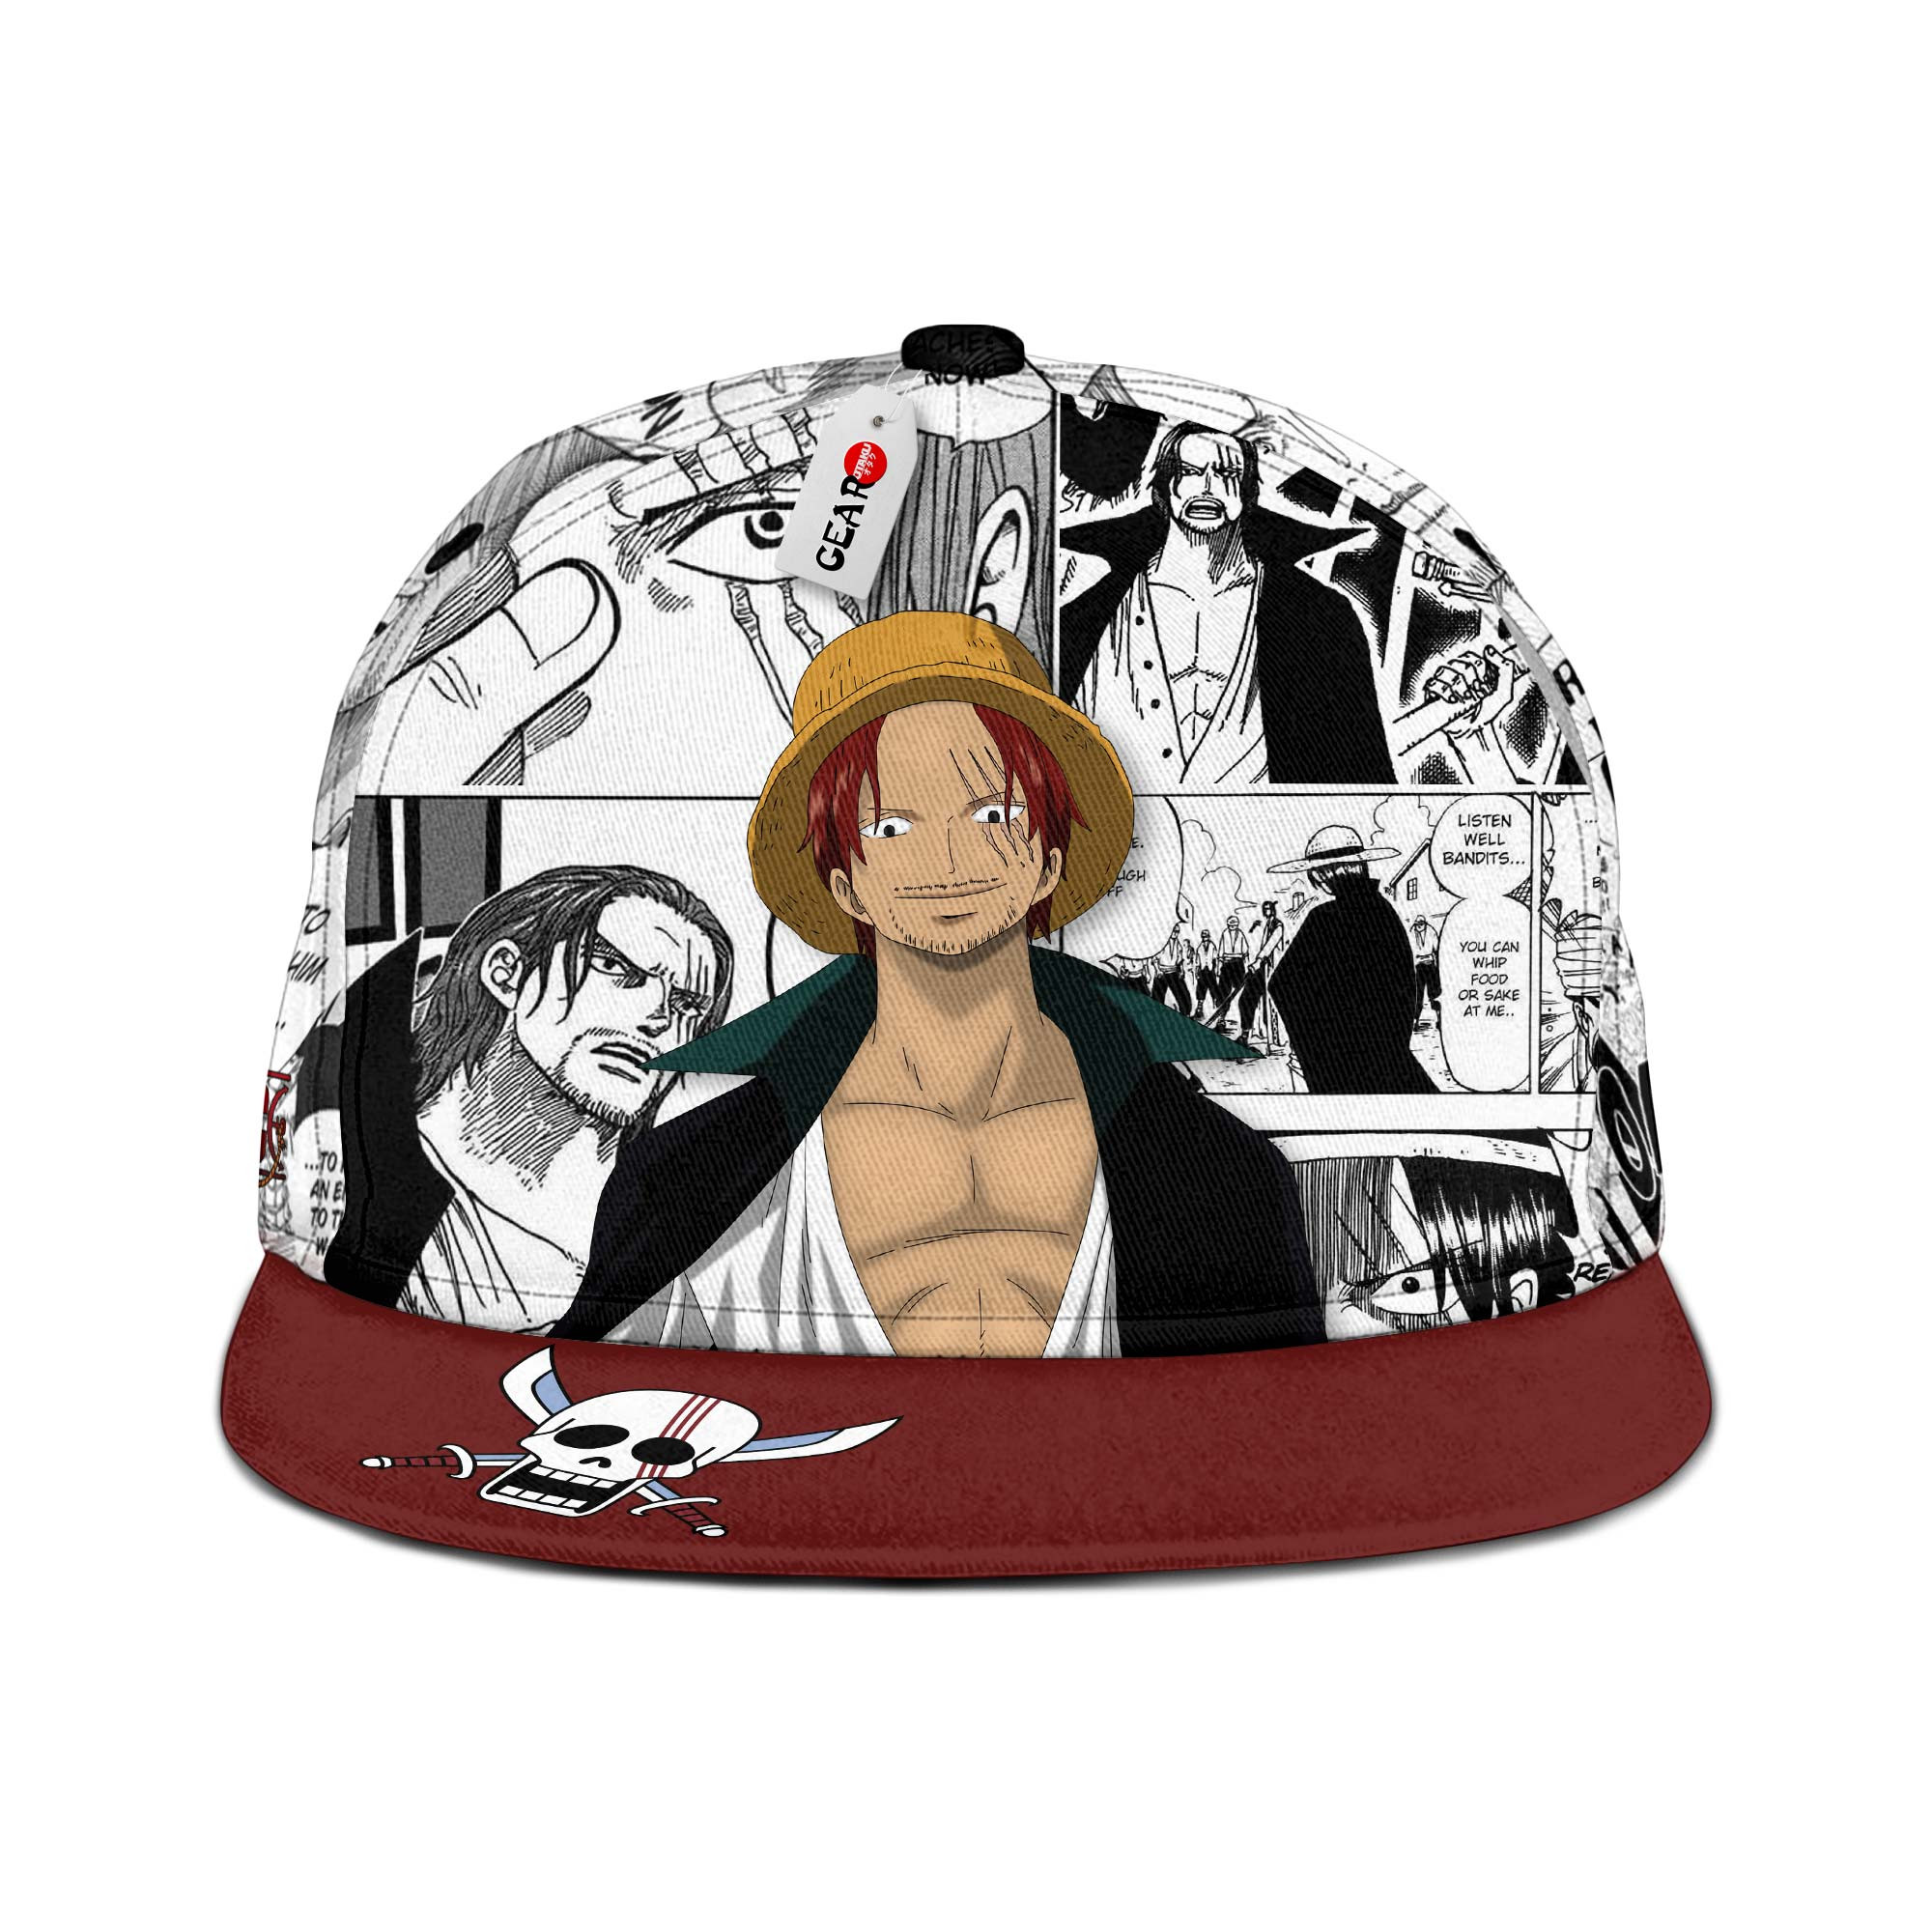 NEW Shanks One Piece Mix Manga Cap hat1